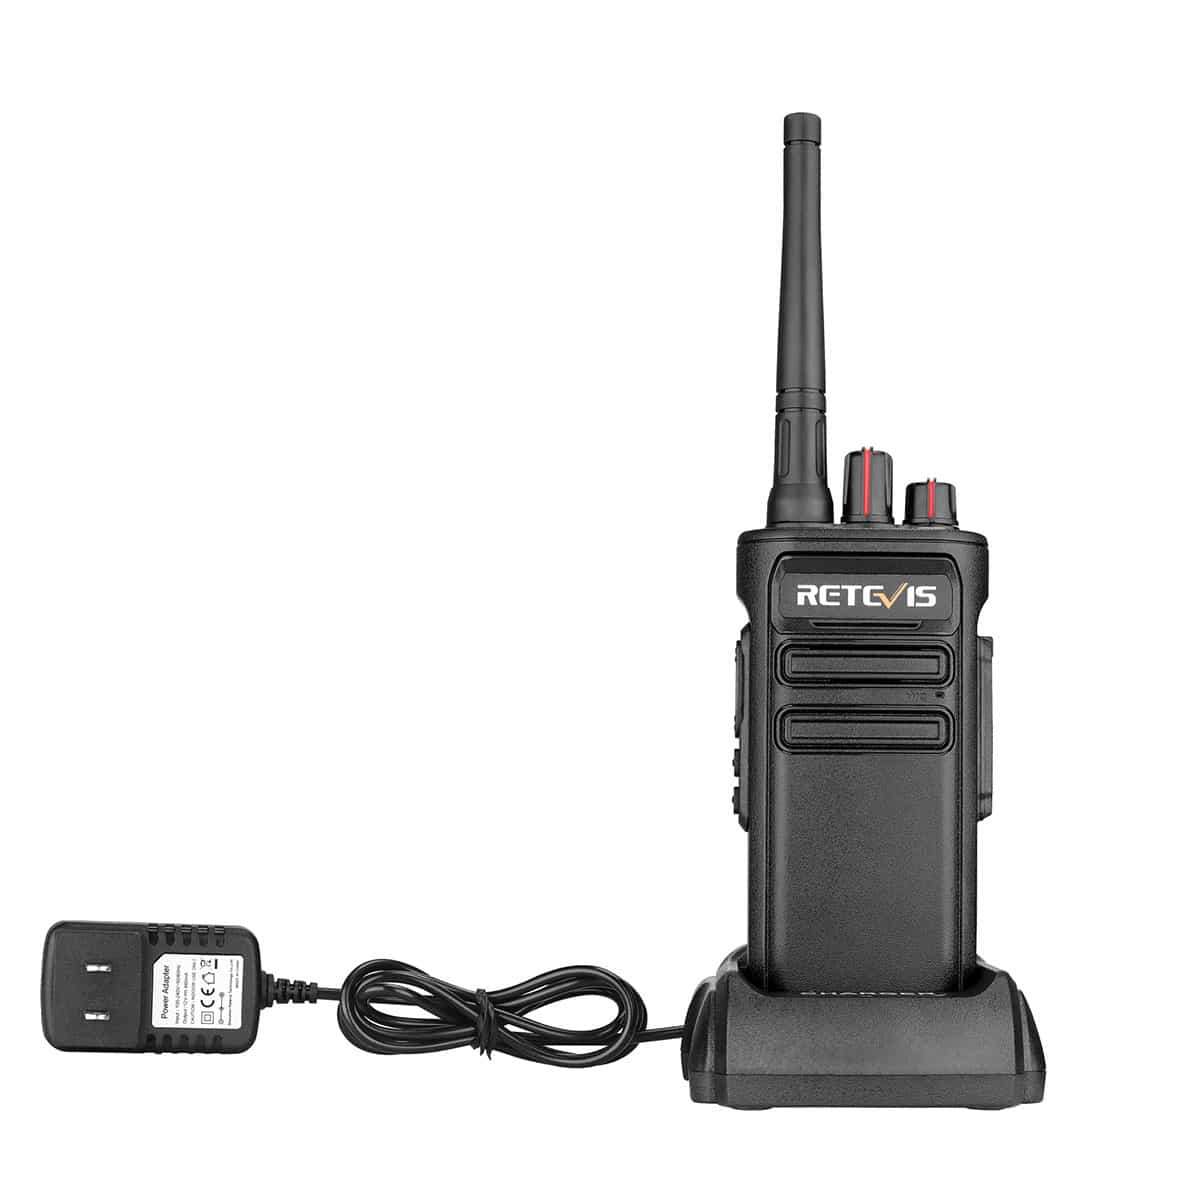 Retevis rb23 gmrs walkie talkie